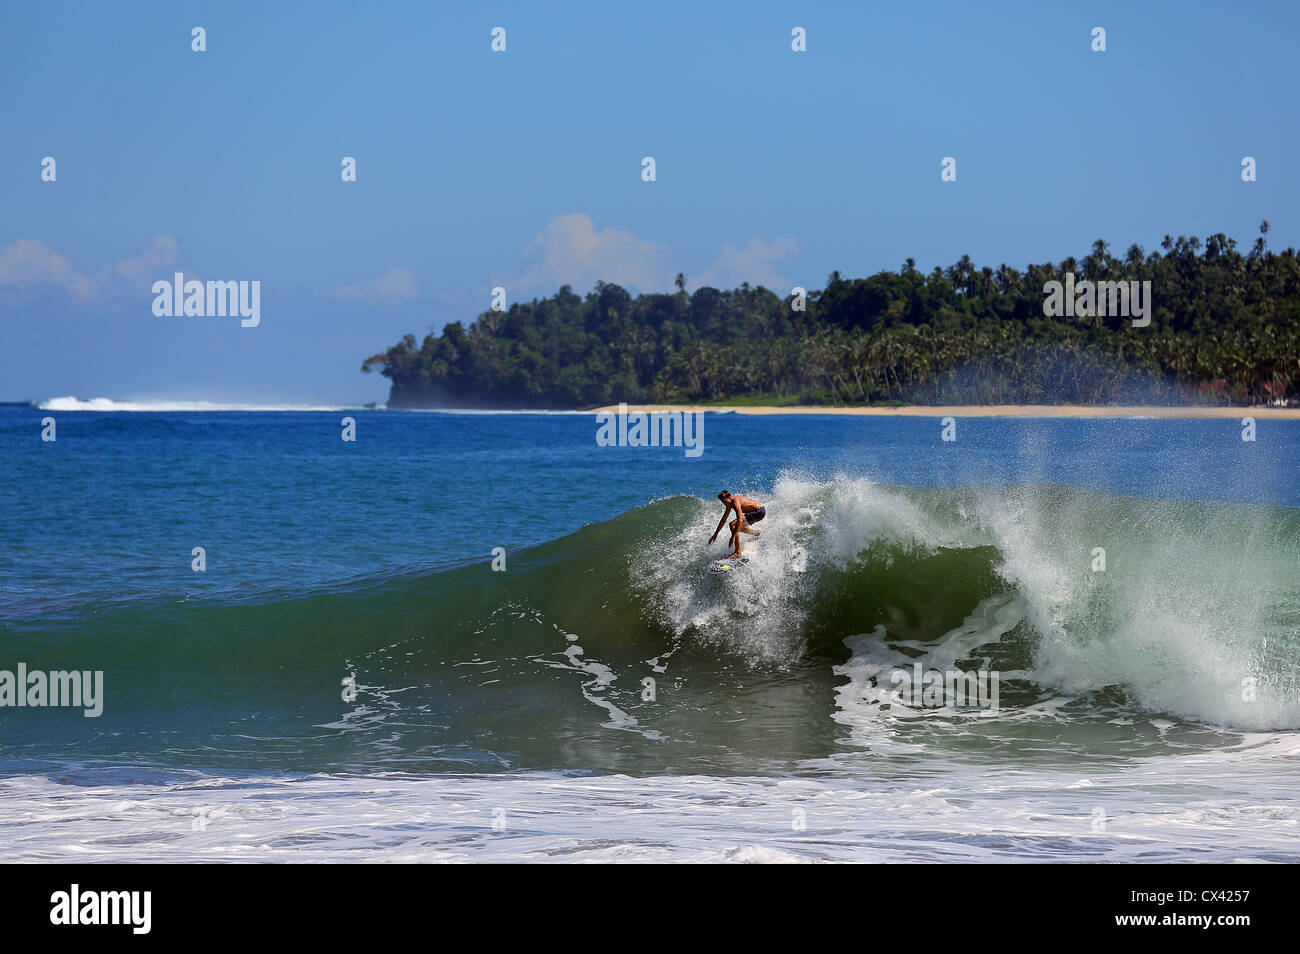 Australian surfer surfing a beach break wave in Sumatra, Indonesia. Stock Photo